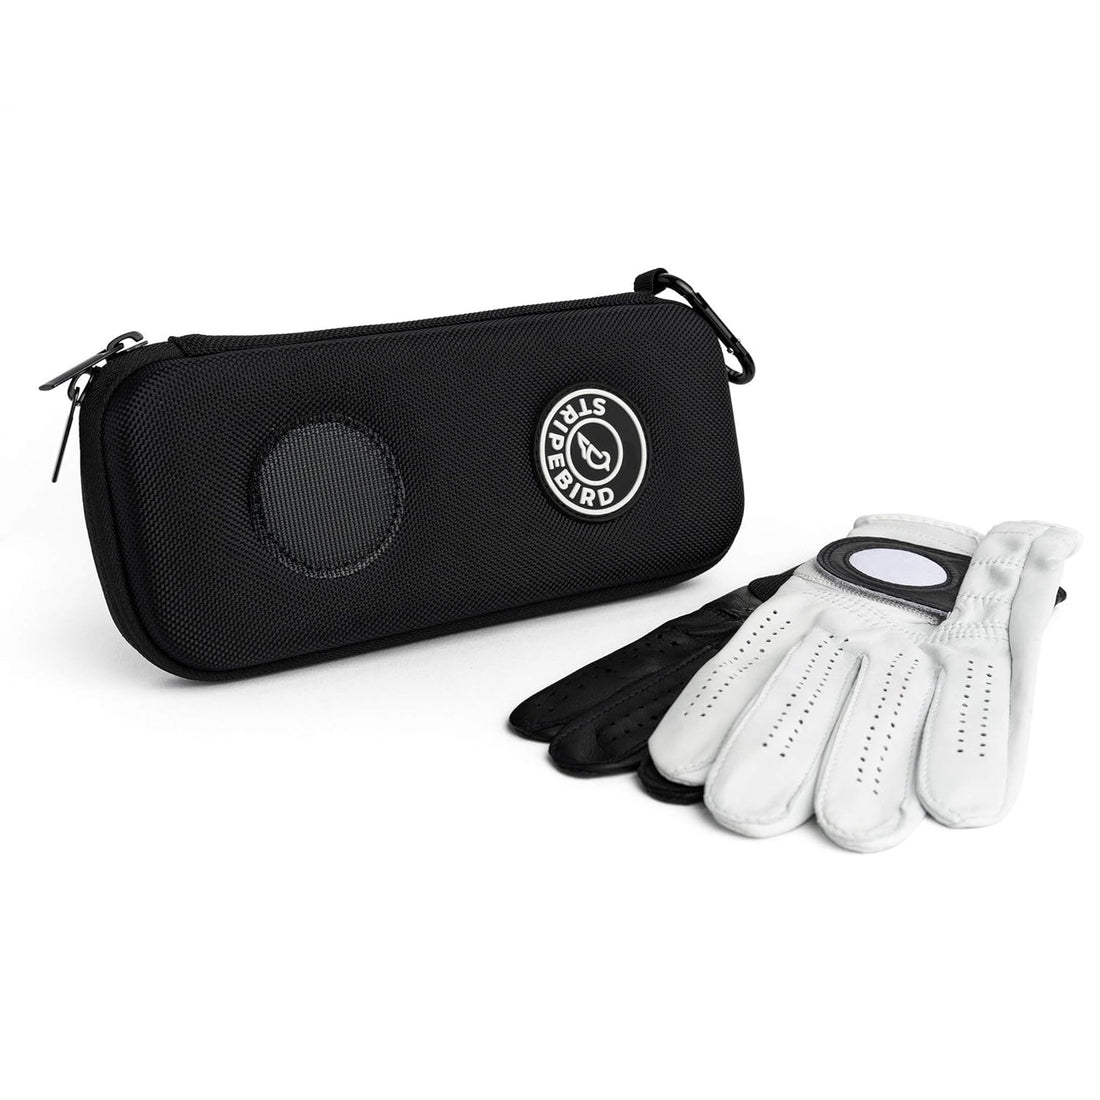 Stripebird - Golf Performance Gloves Holder Case (Stealth Black) - Protect and Keep Golf Gloves Dry - Moisture Free Storage Design - Includes Golf Bag Clip for Golfers